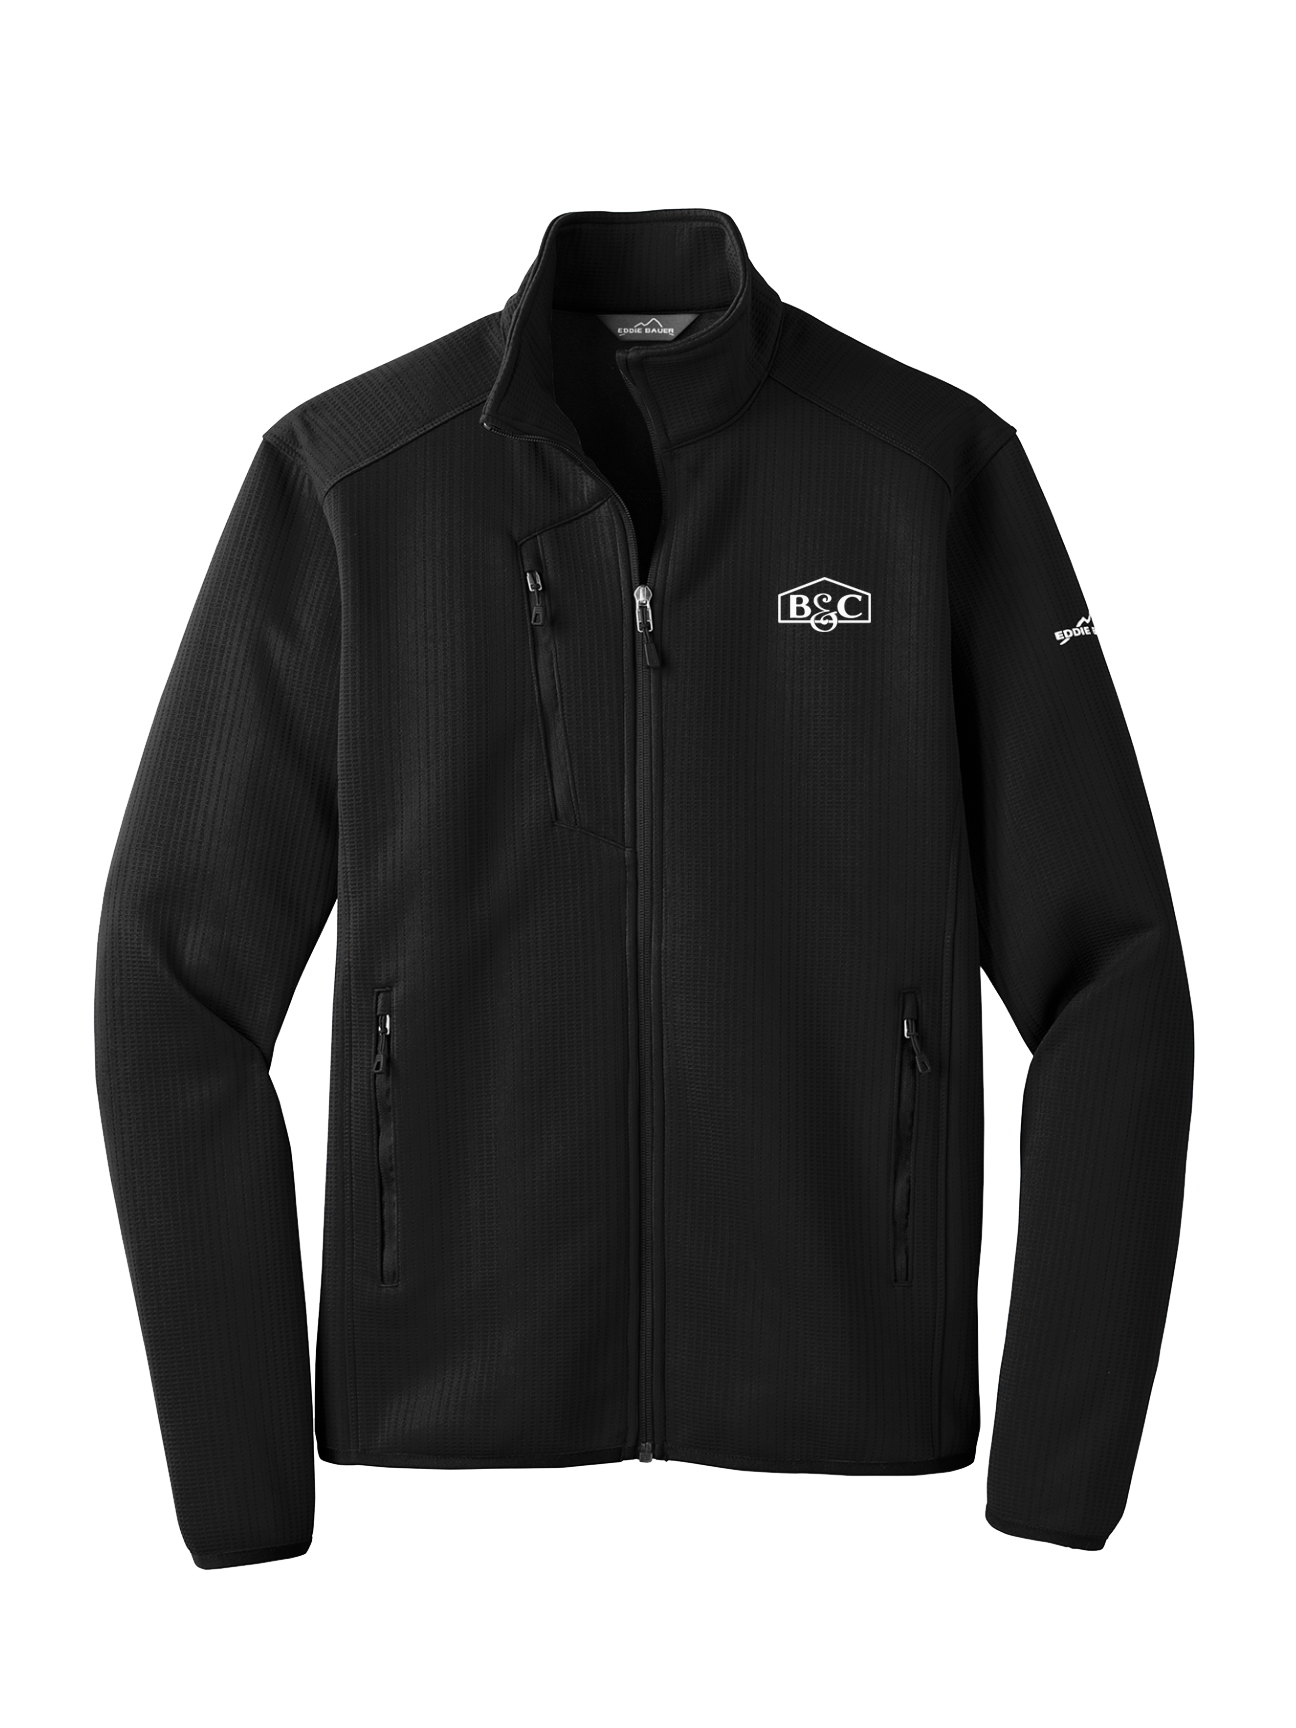 B&C - Mens - Eddie Bauer ® Dash Full-Zip Fleece Jacket